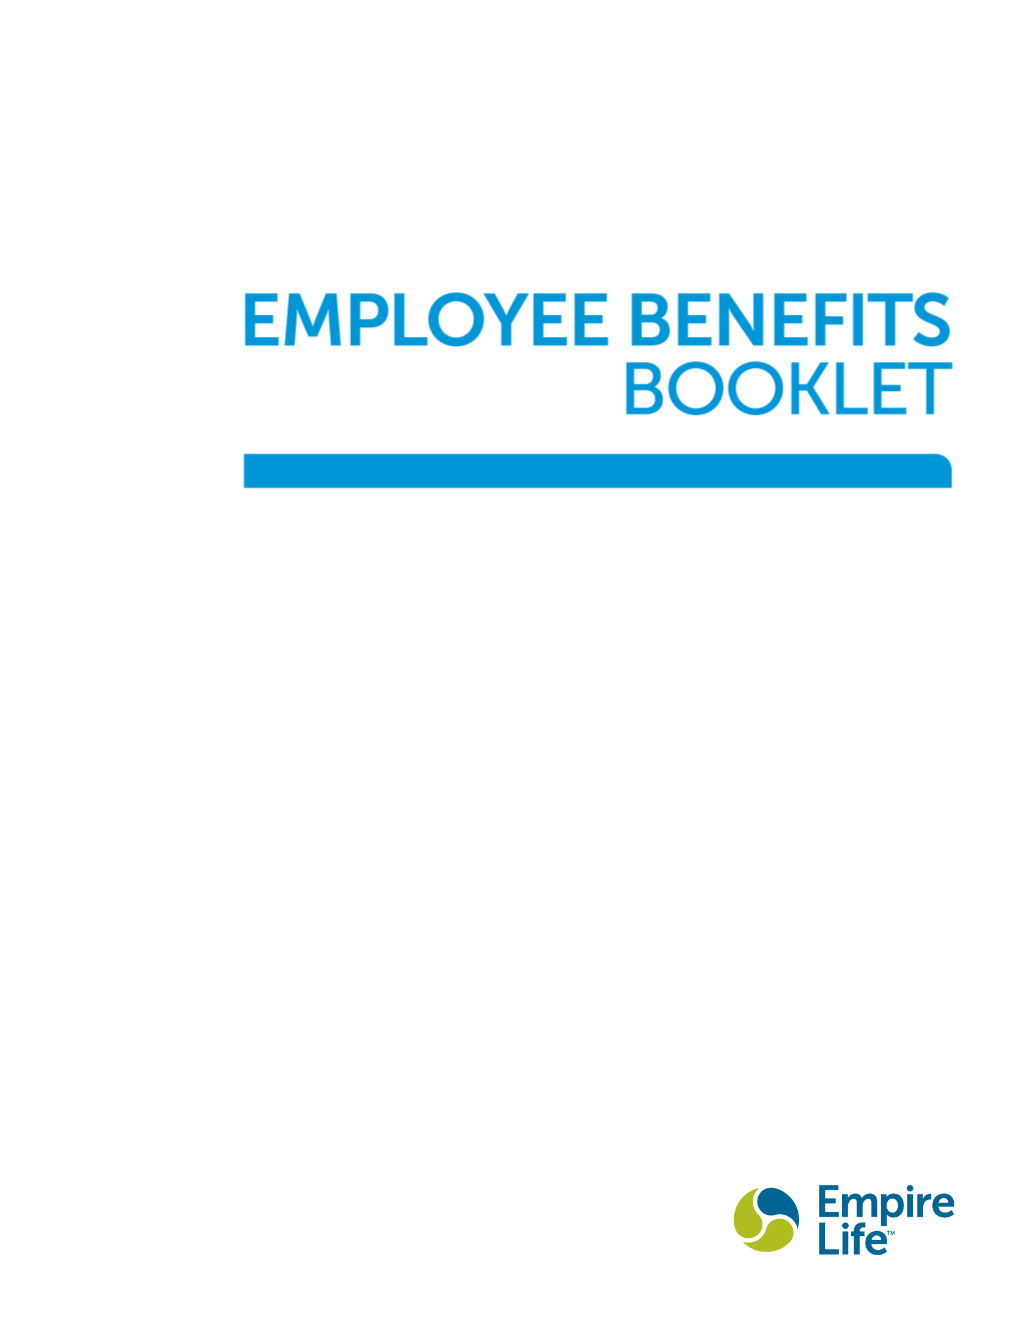 Empire Life Employee Benefits Booklet